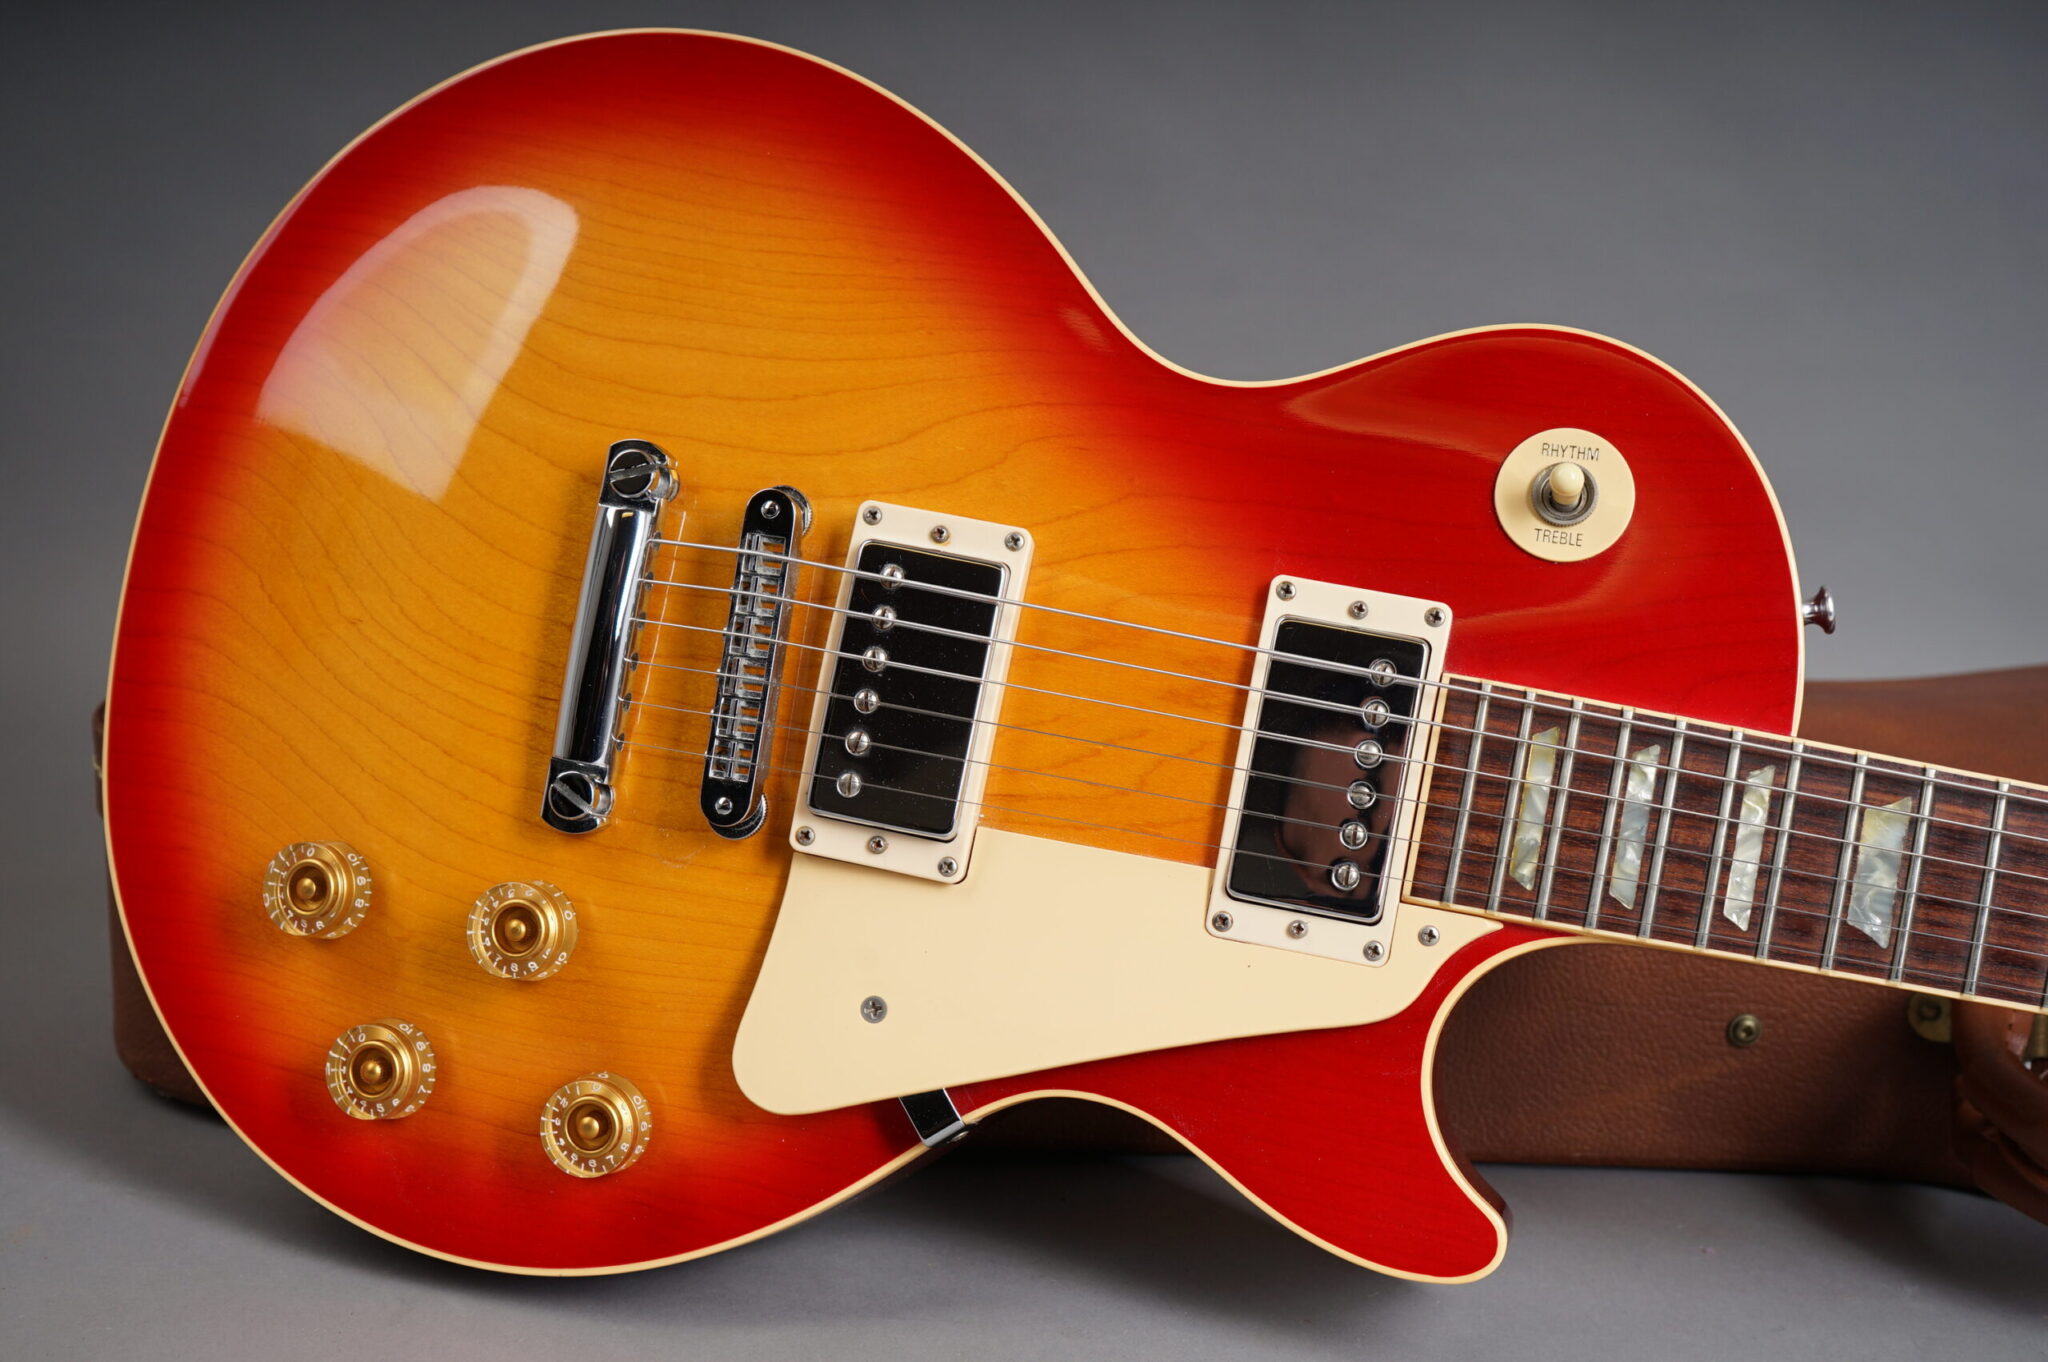 https://guitarpoint.de/app/uploads/products/1993-gibson-les-paul-standard-one-piece-top/1993-Gibson-Les-Paul-Standard-CSB-93443418-9-scaled-2048x1362.jpg